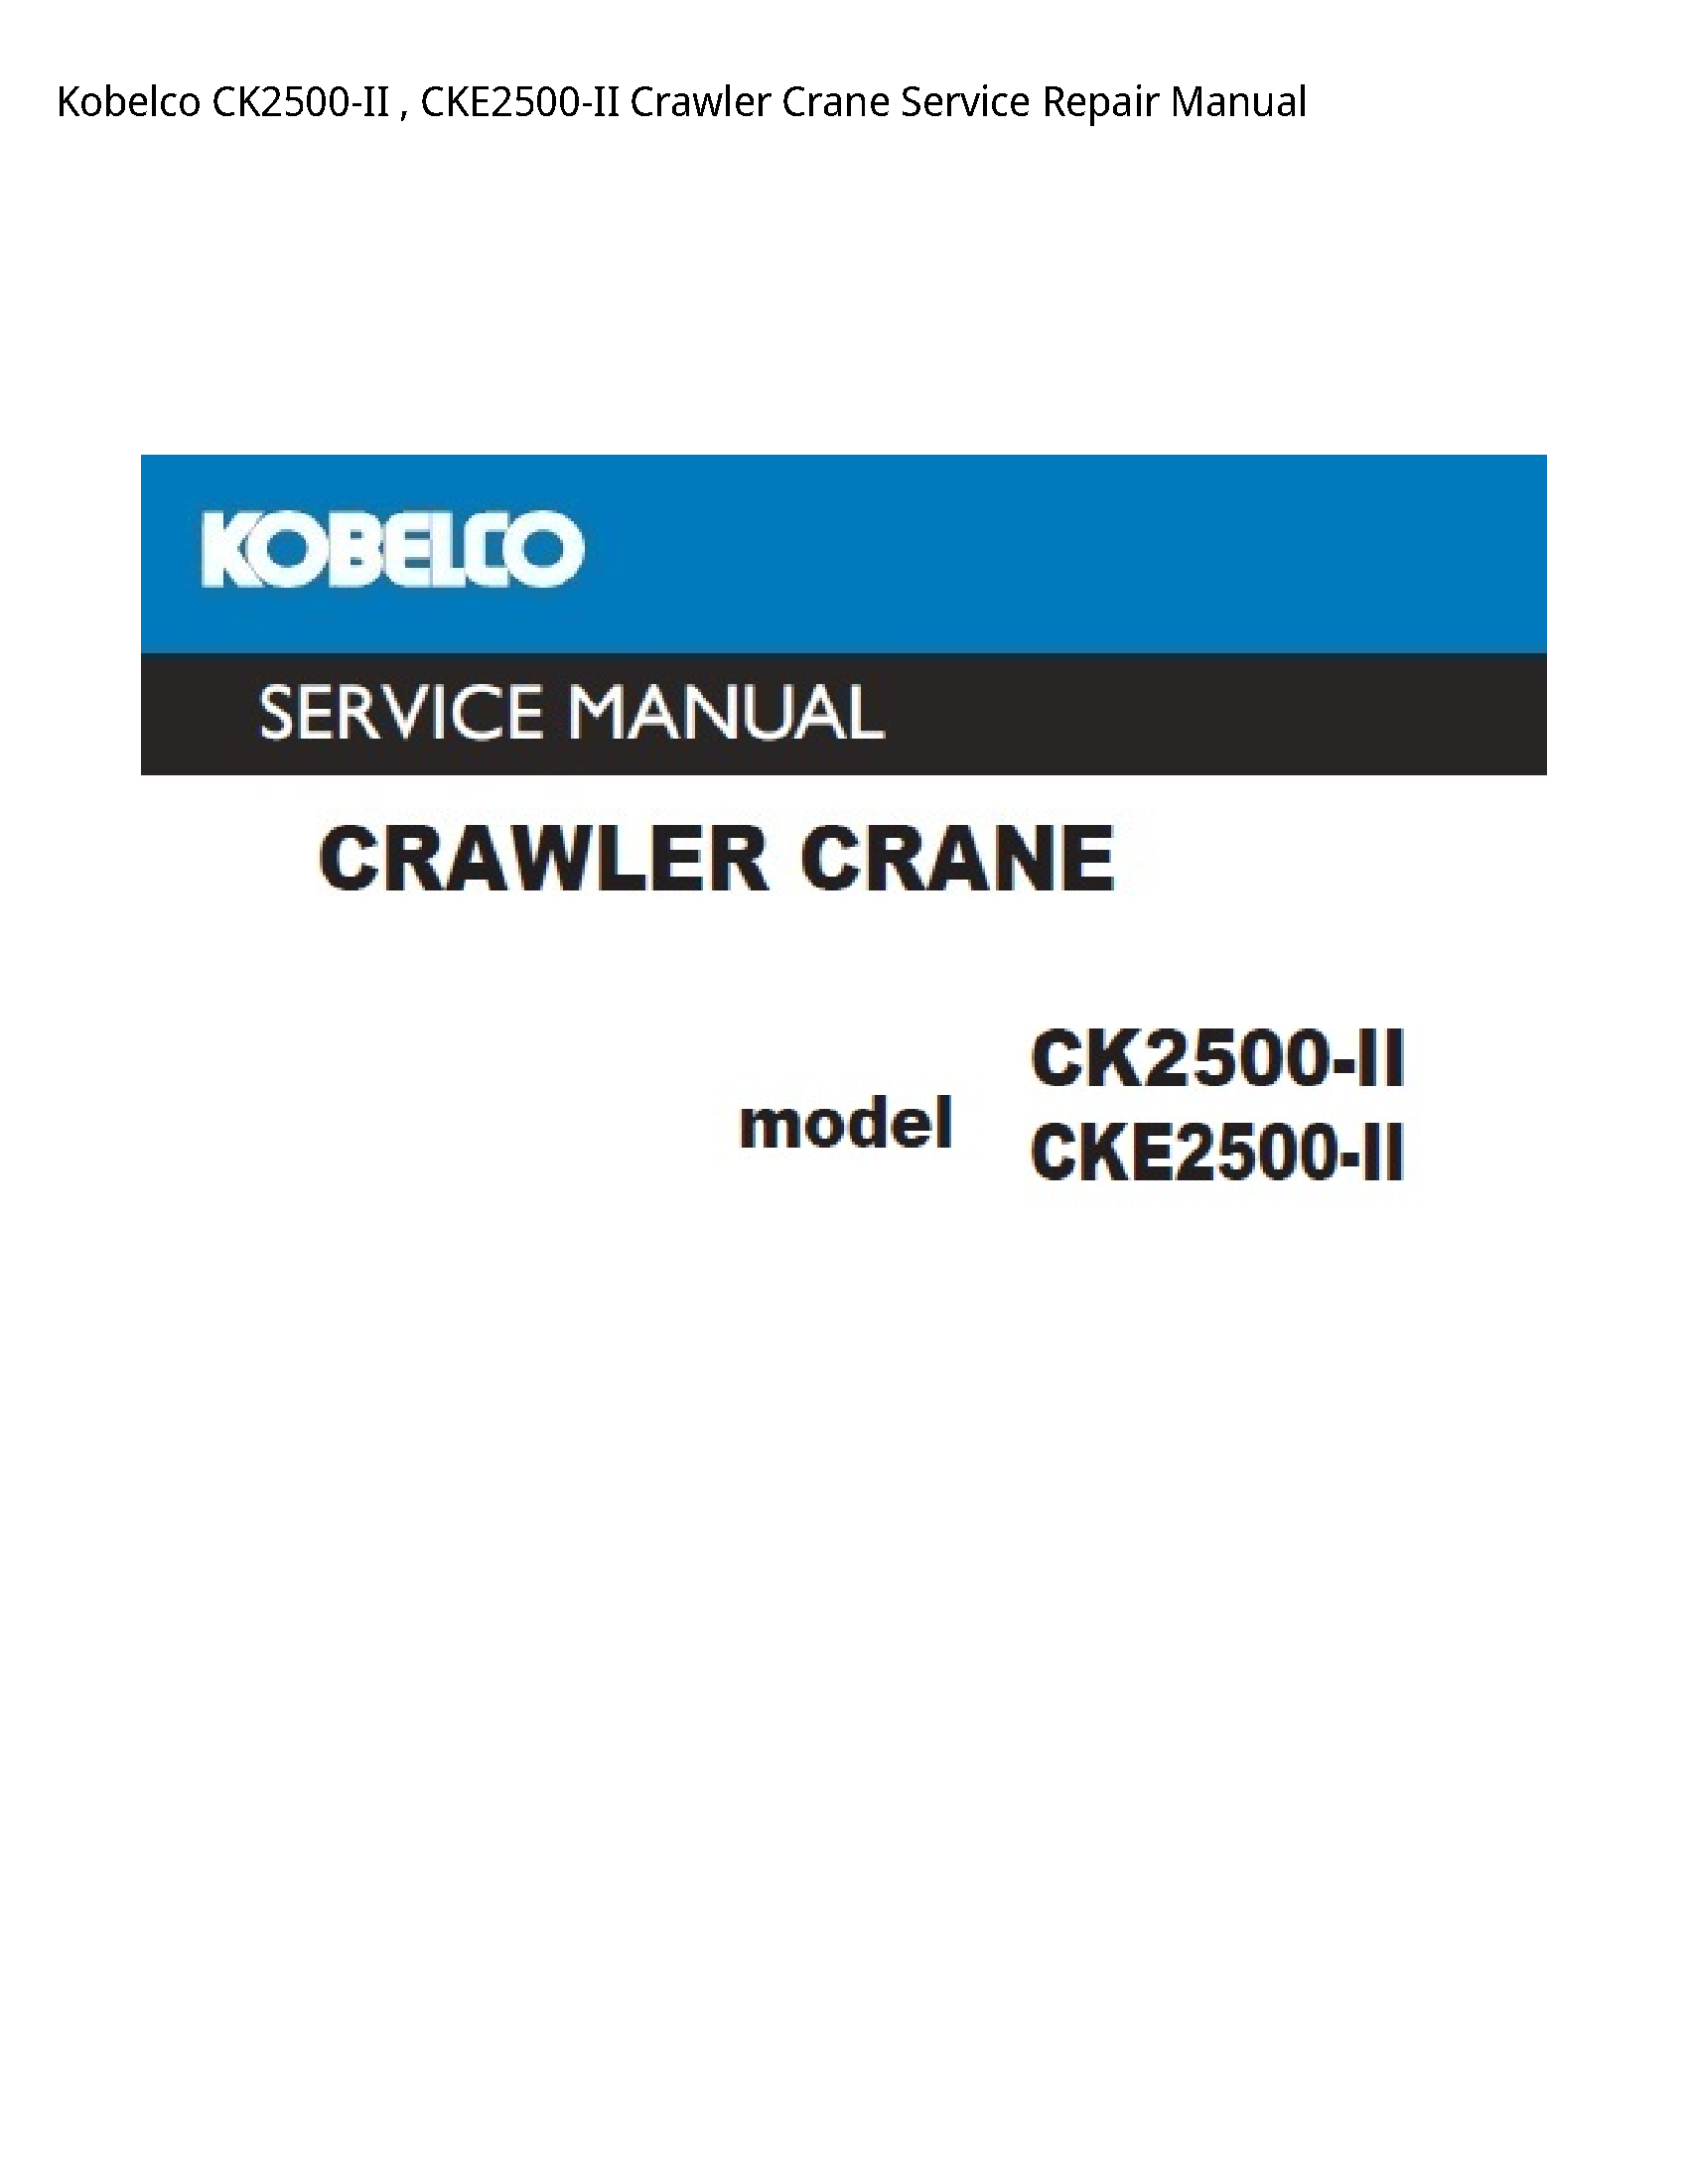 Kobelco CK2500-II Crawler Crane manual